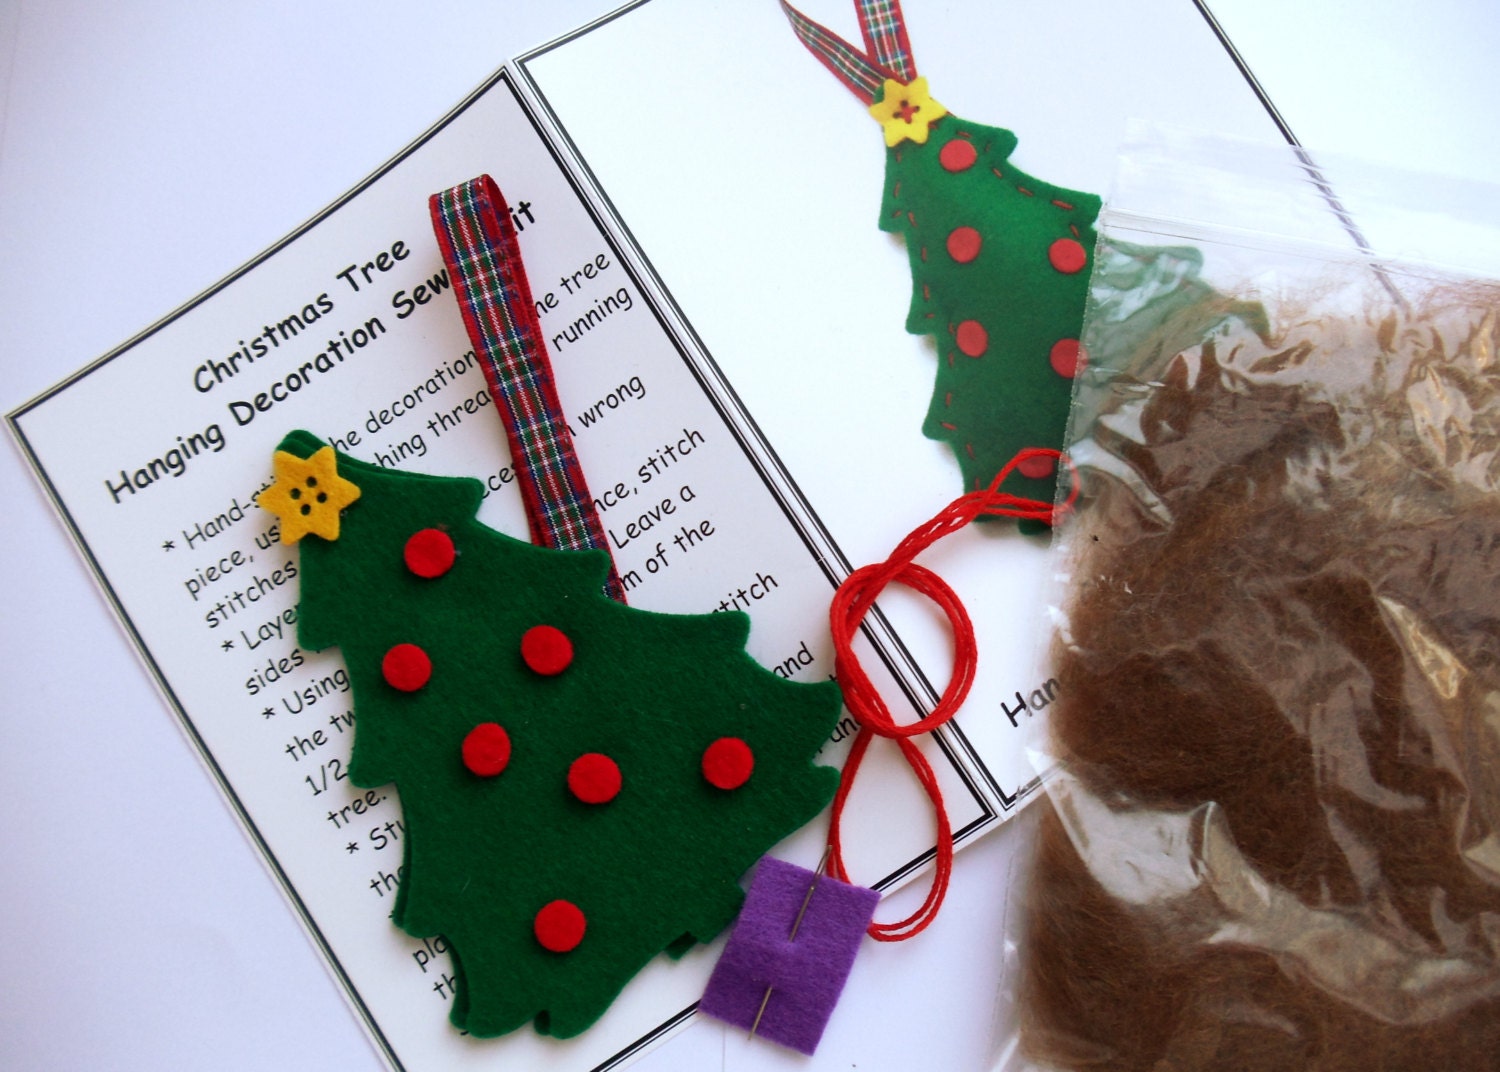 Sewing Kit Felt Christmas Decorations Craft Kit Christmas Tree Sewing Kit - TheWoollyKnitter